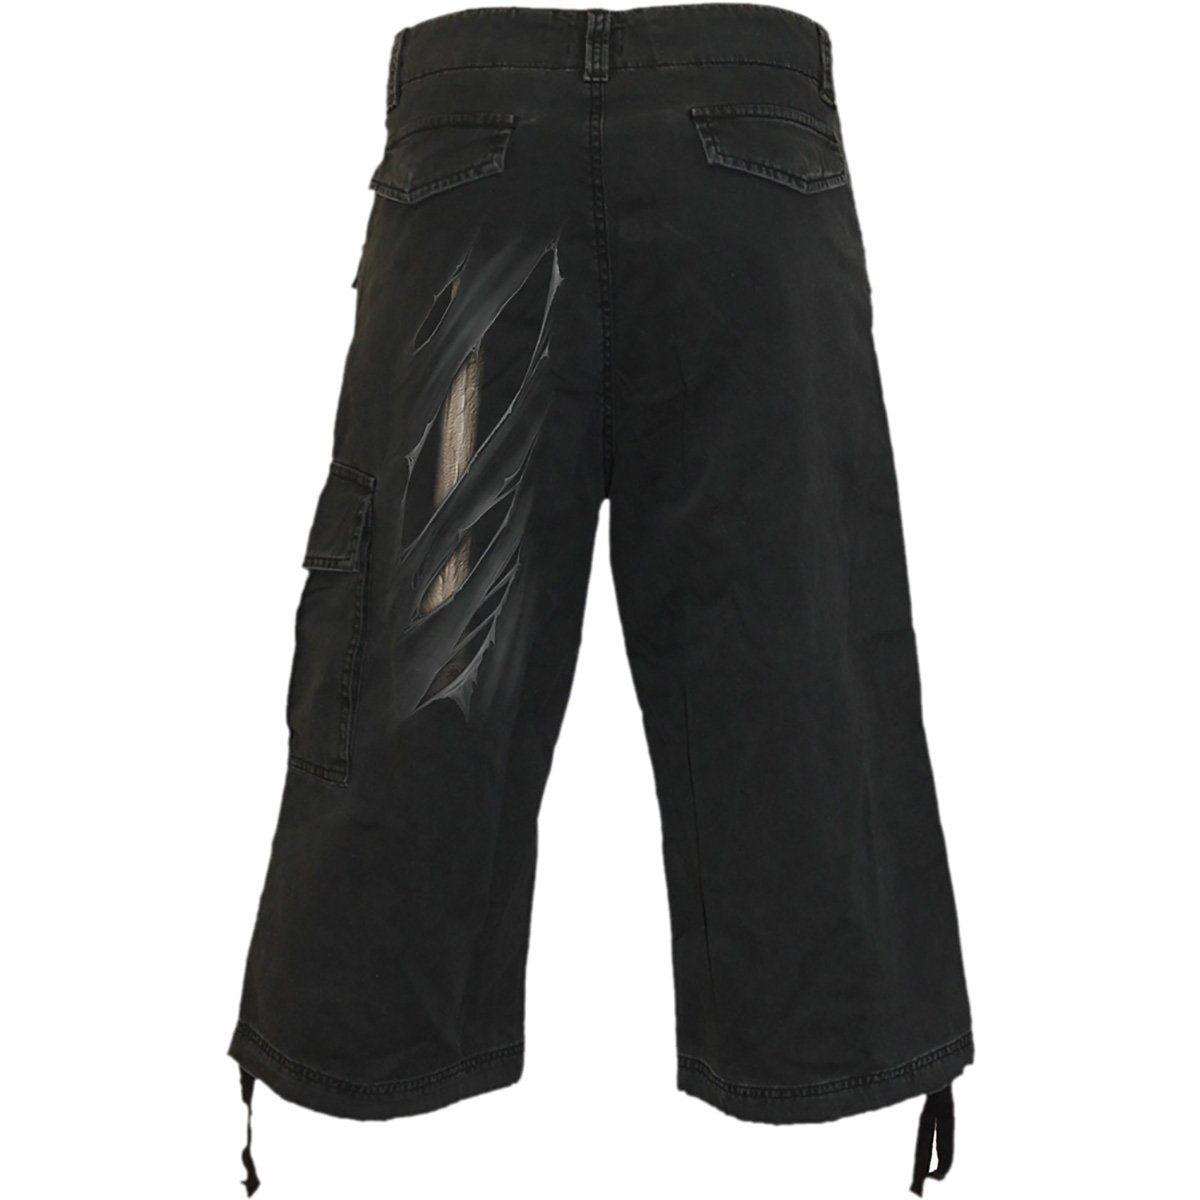 BONE RIPS - Vintage Cargo Shorts 3/4 Long Black Angelwarriorfitness.com